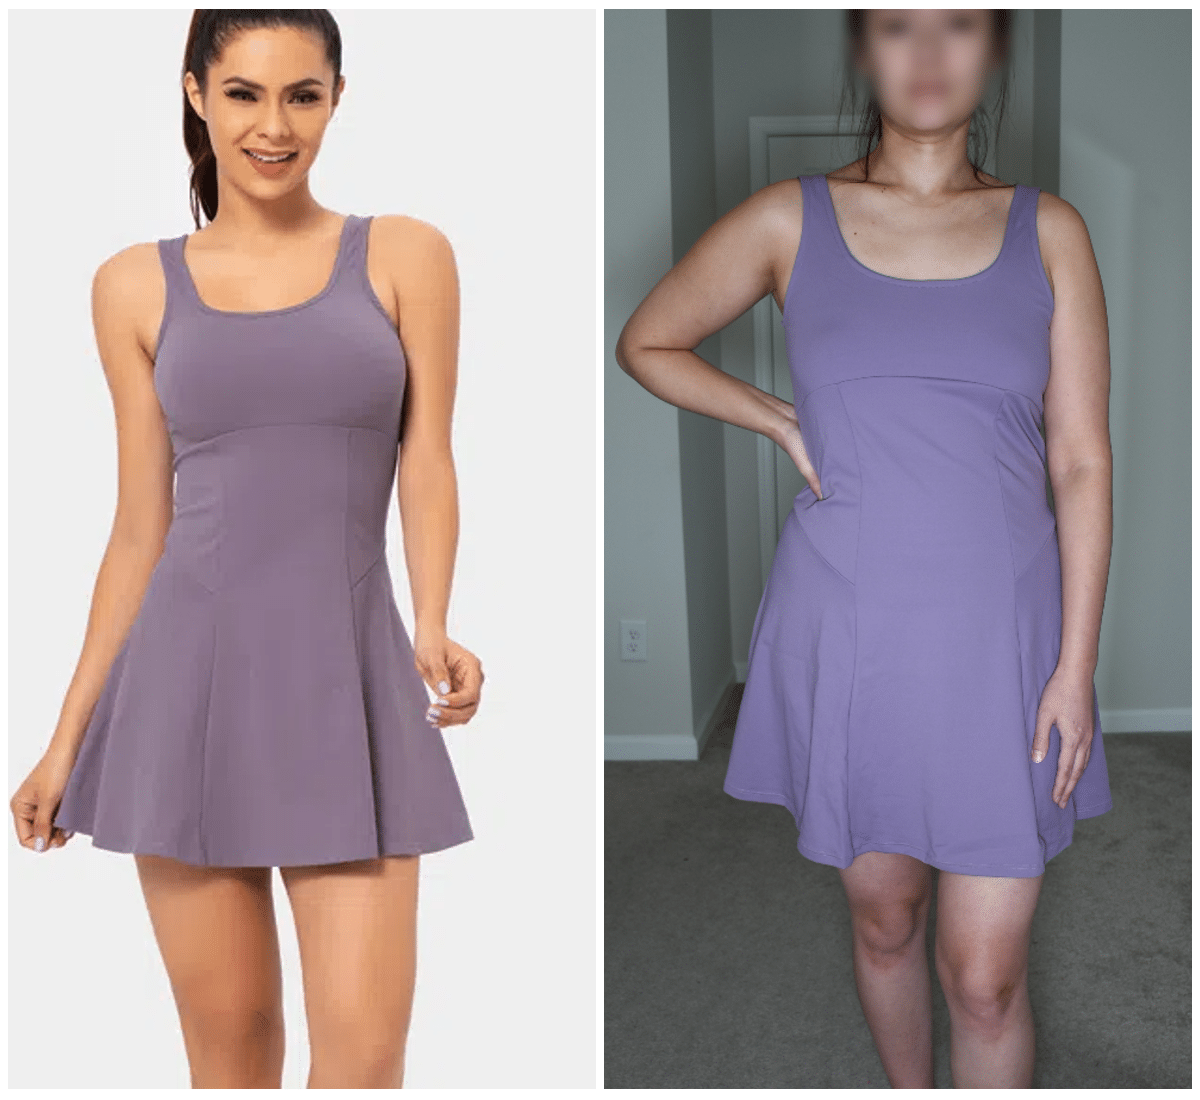 halara mini dress set comparison